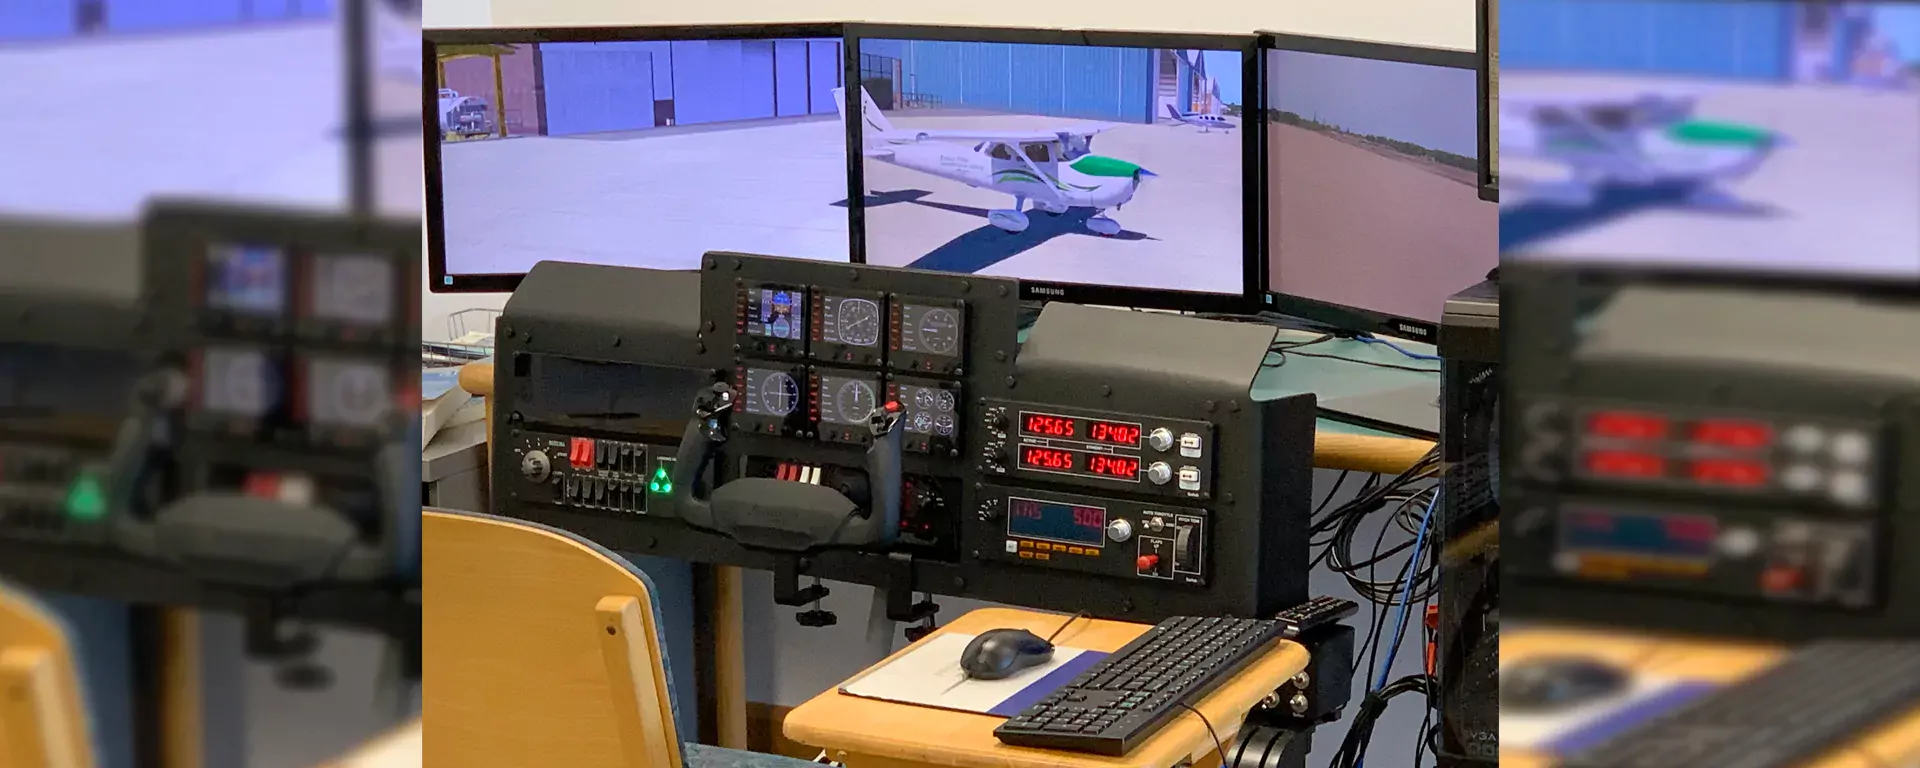 image of the flight simulator at Robert Morgade Library